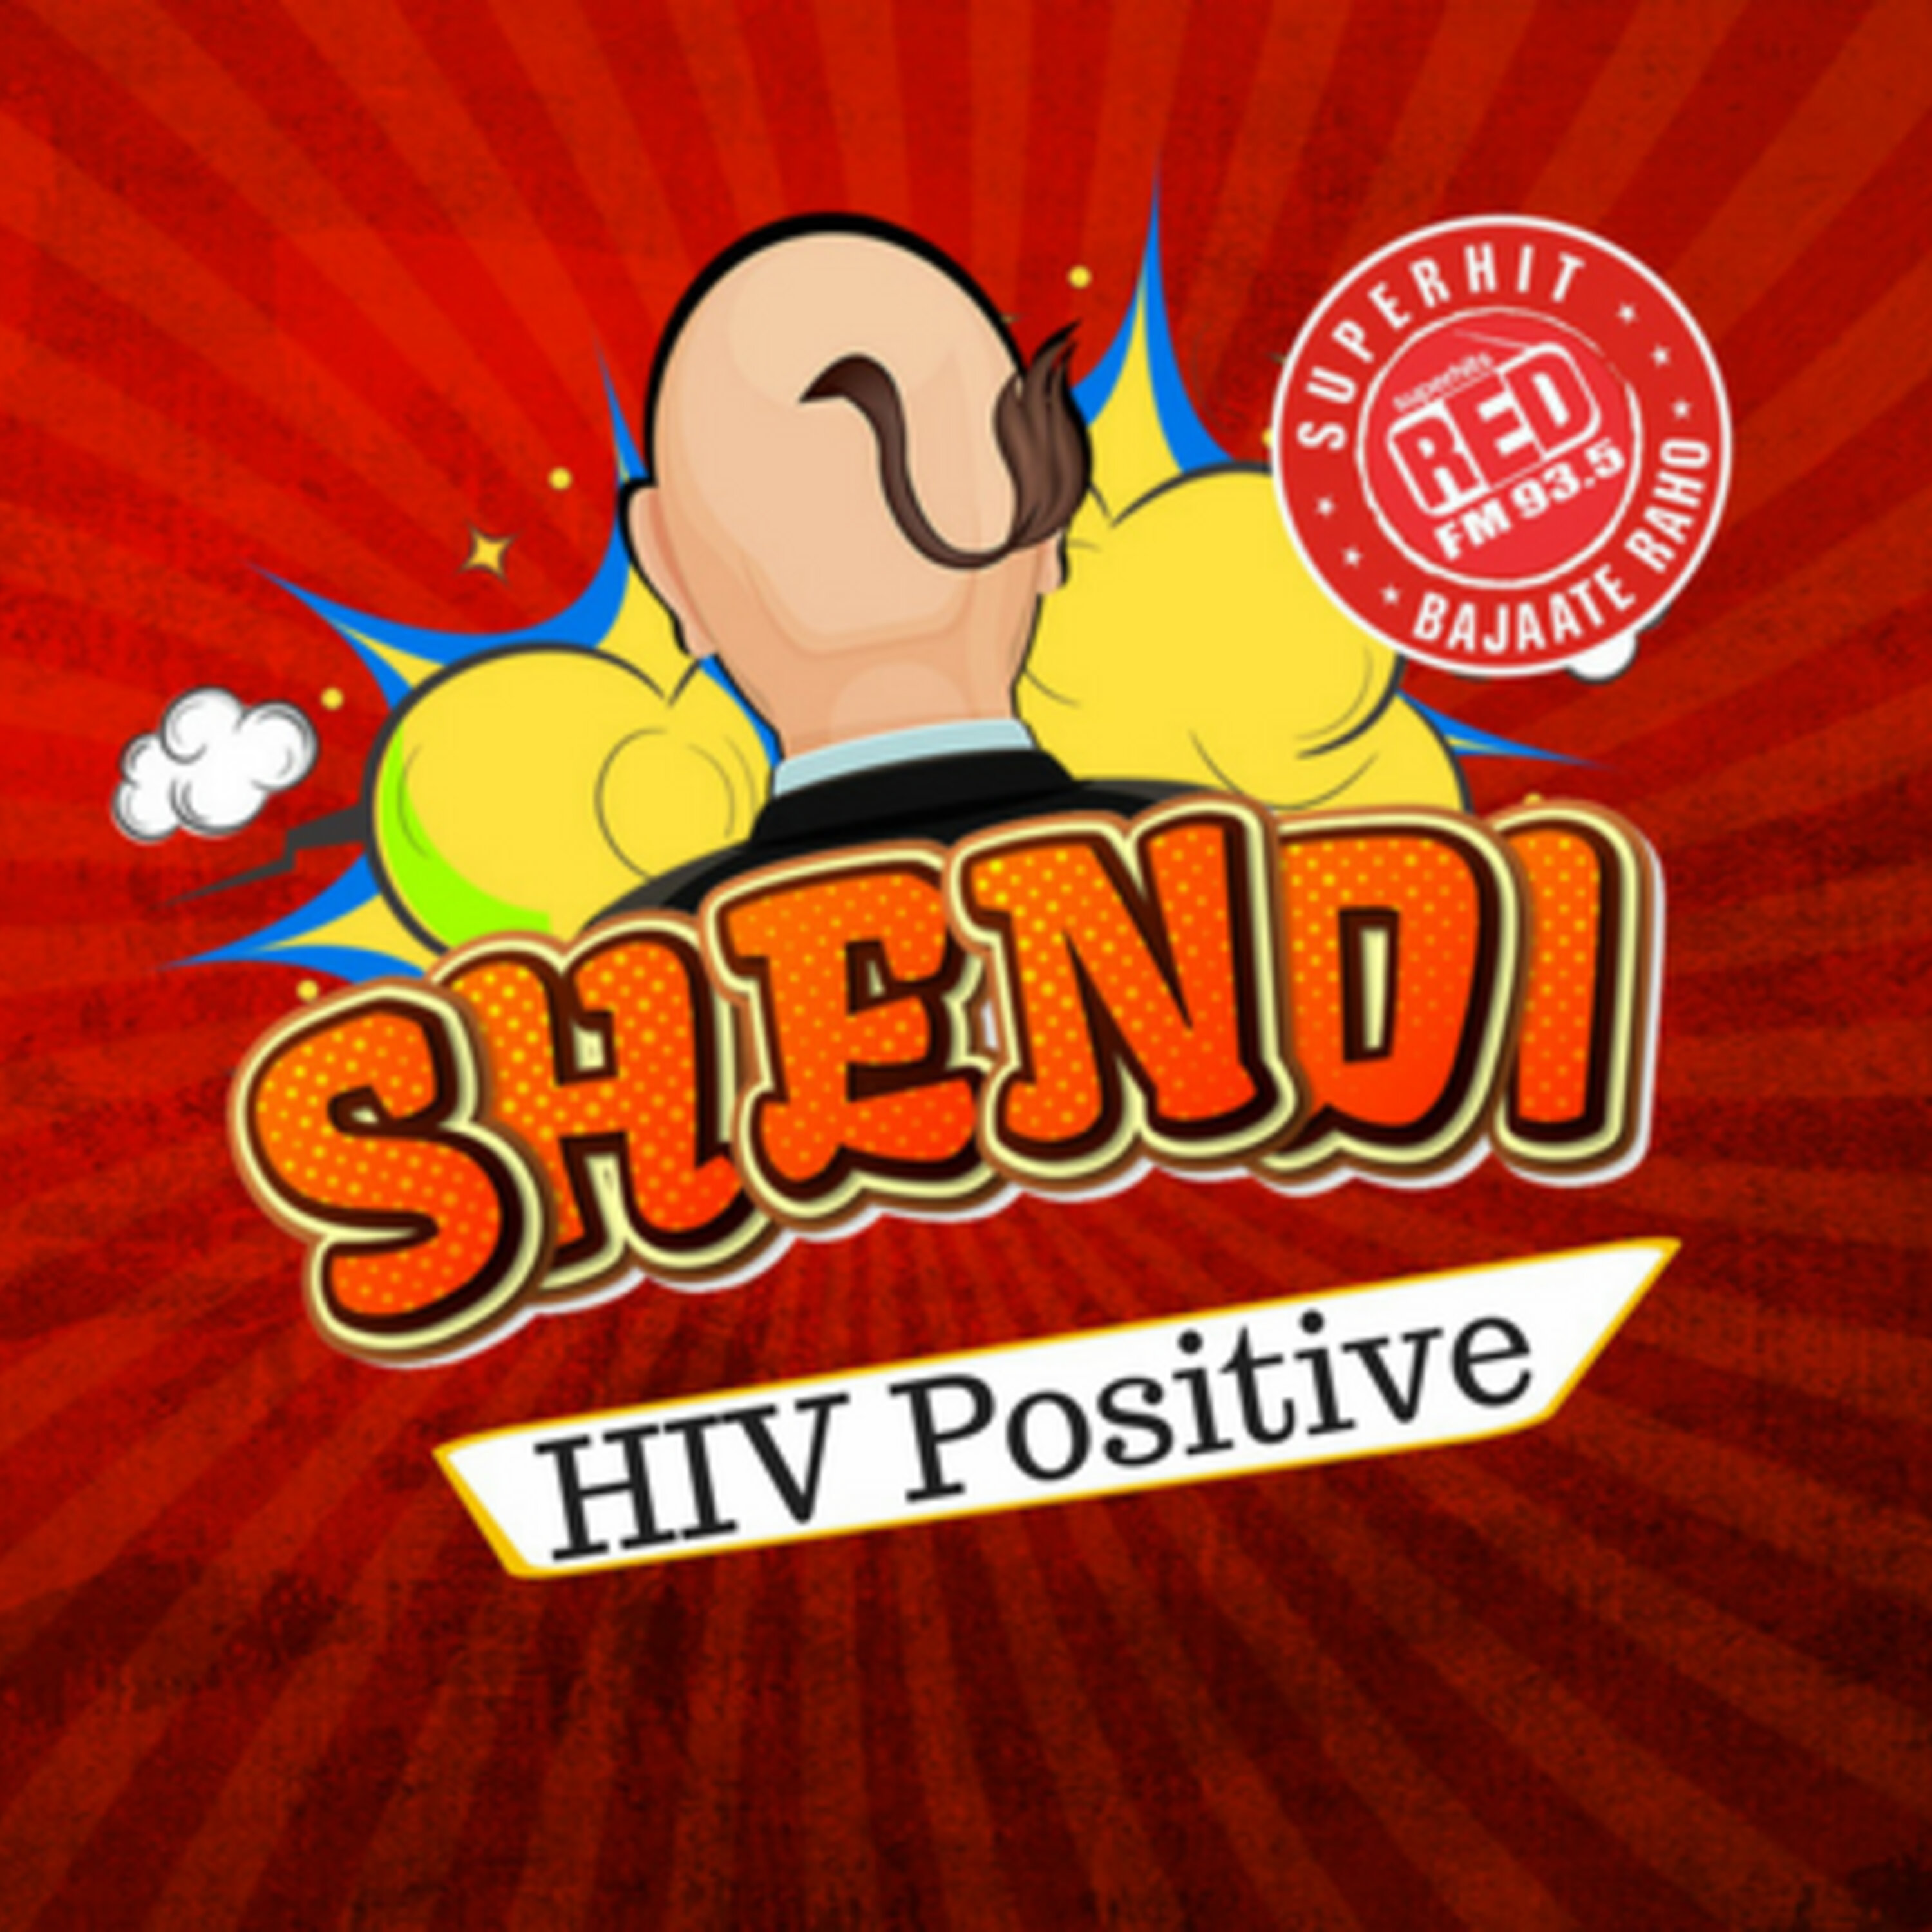 Red FM Shendi- HIV Positive